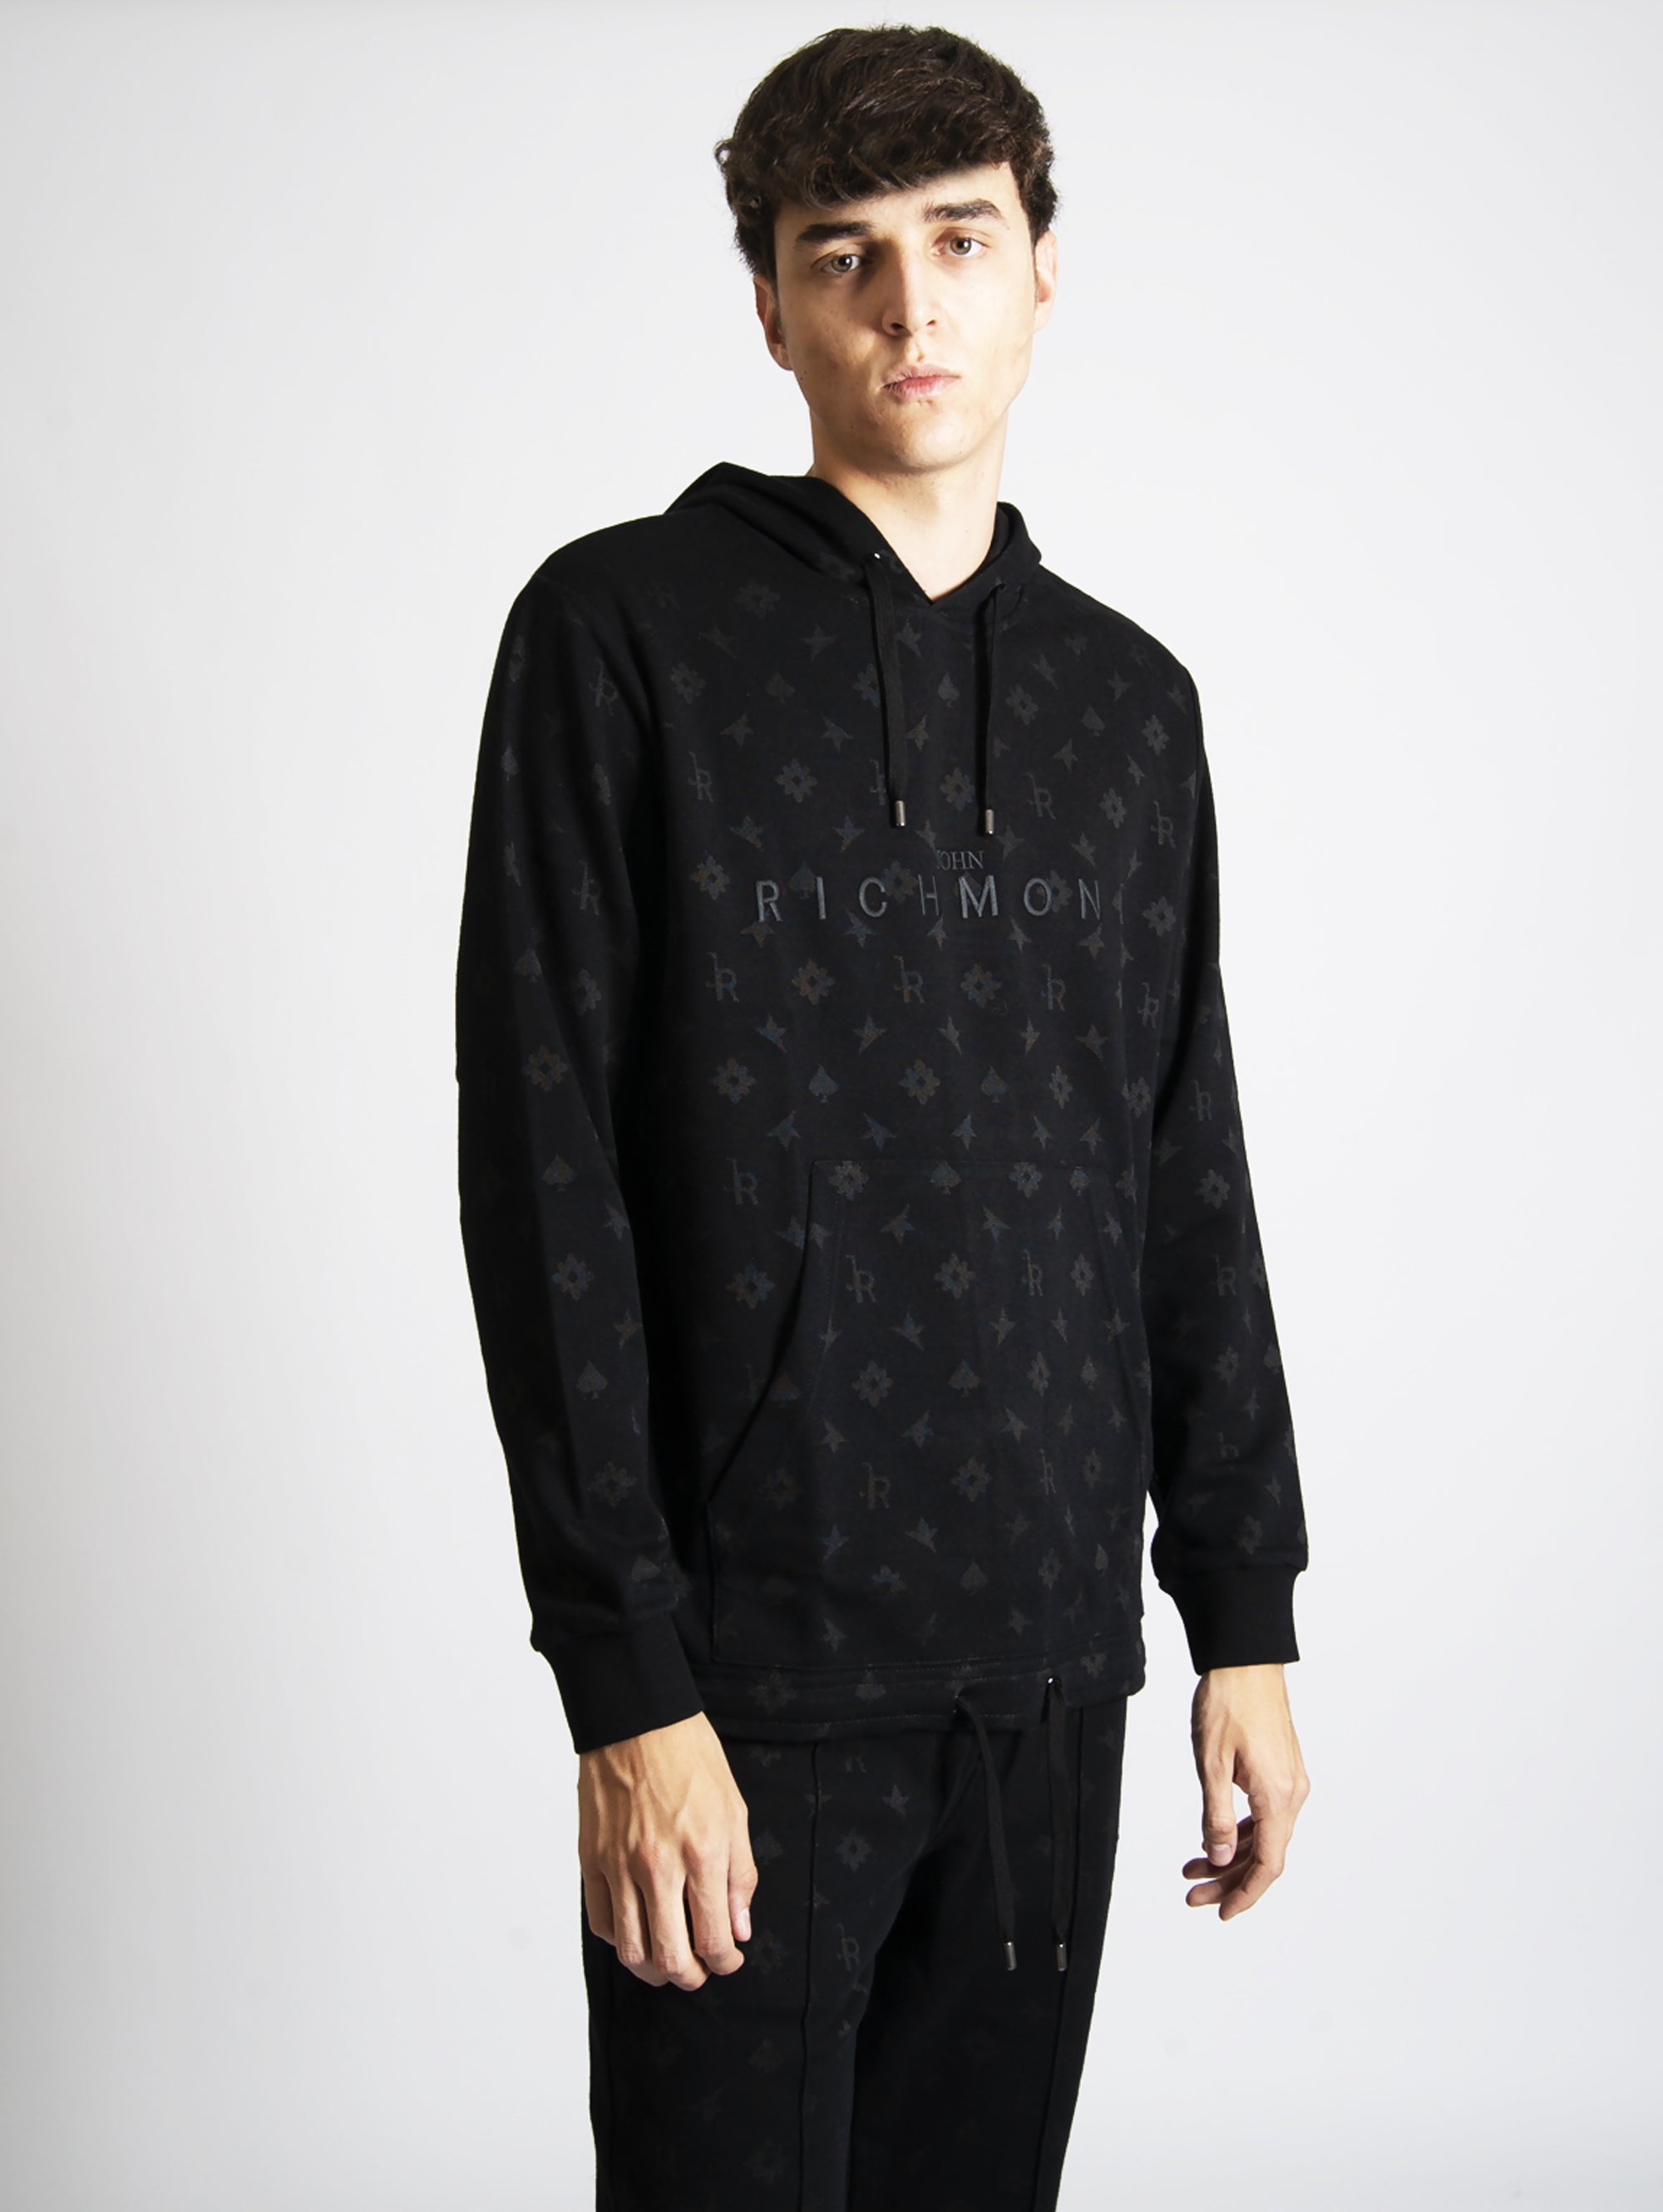 Sweatshirt mit schwarzem Jacquard-Print